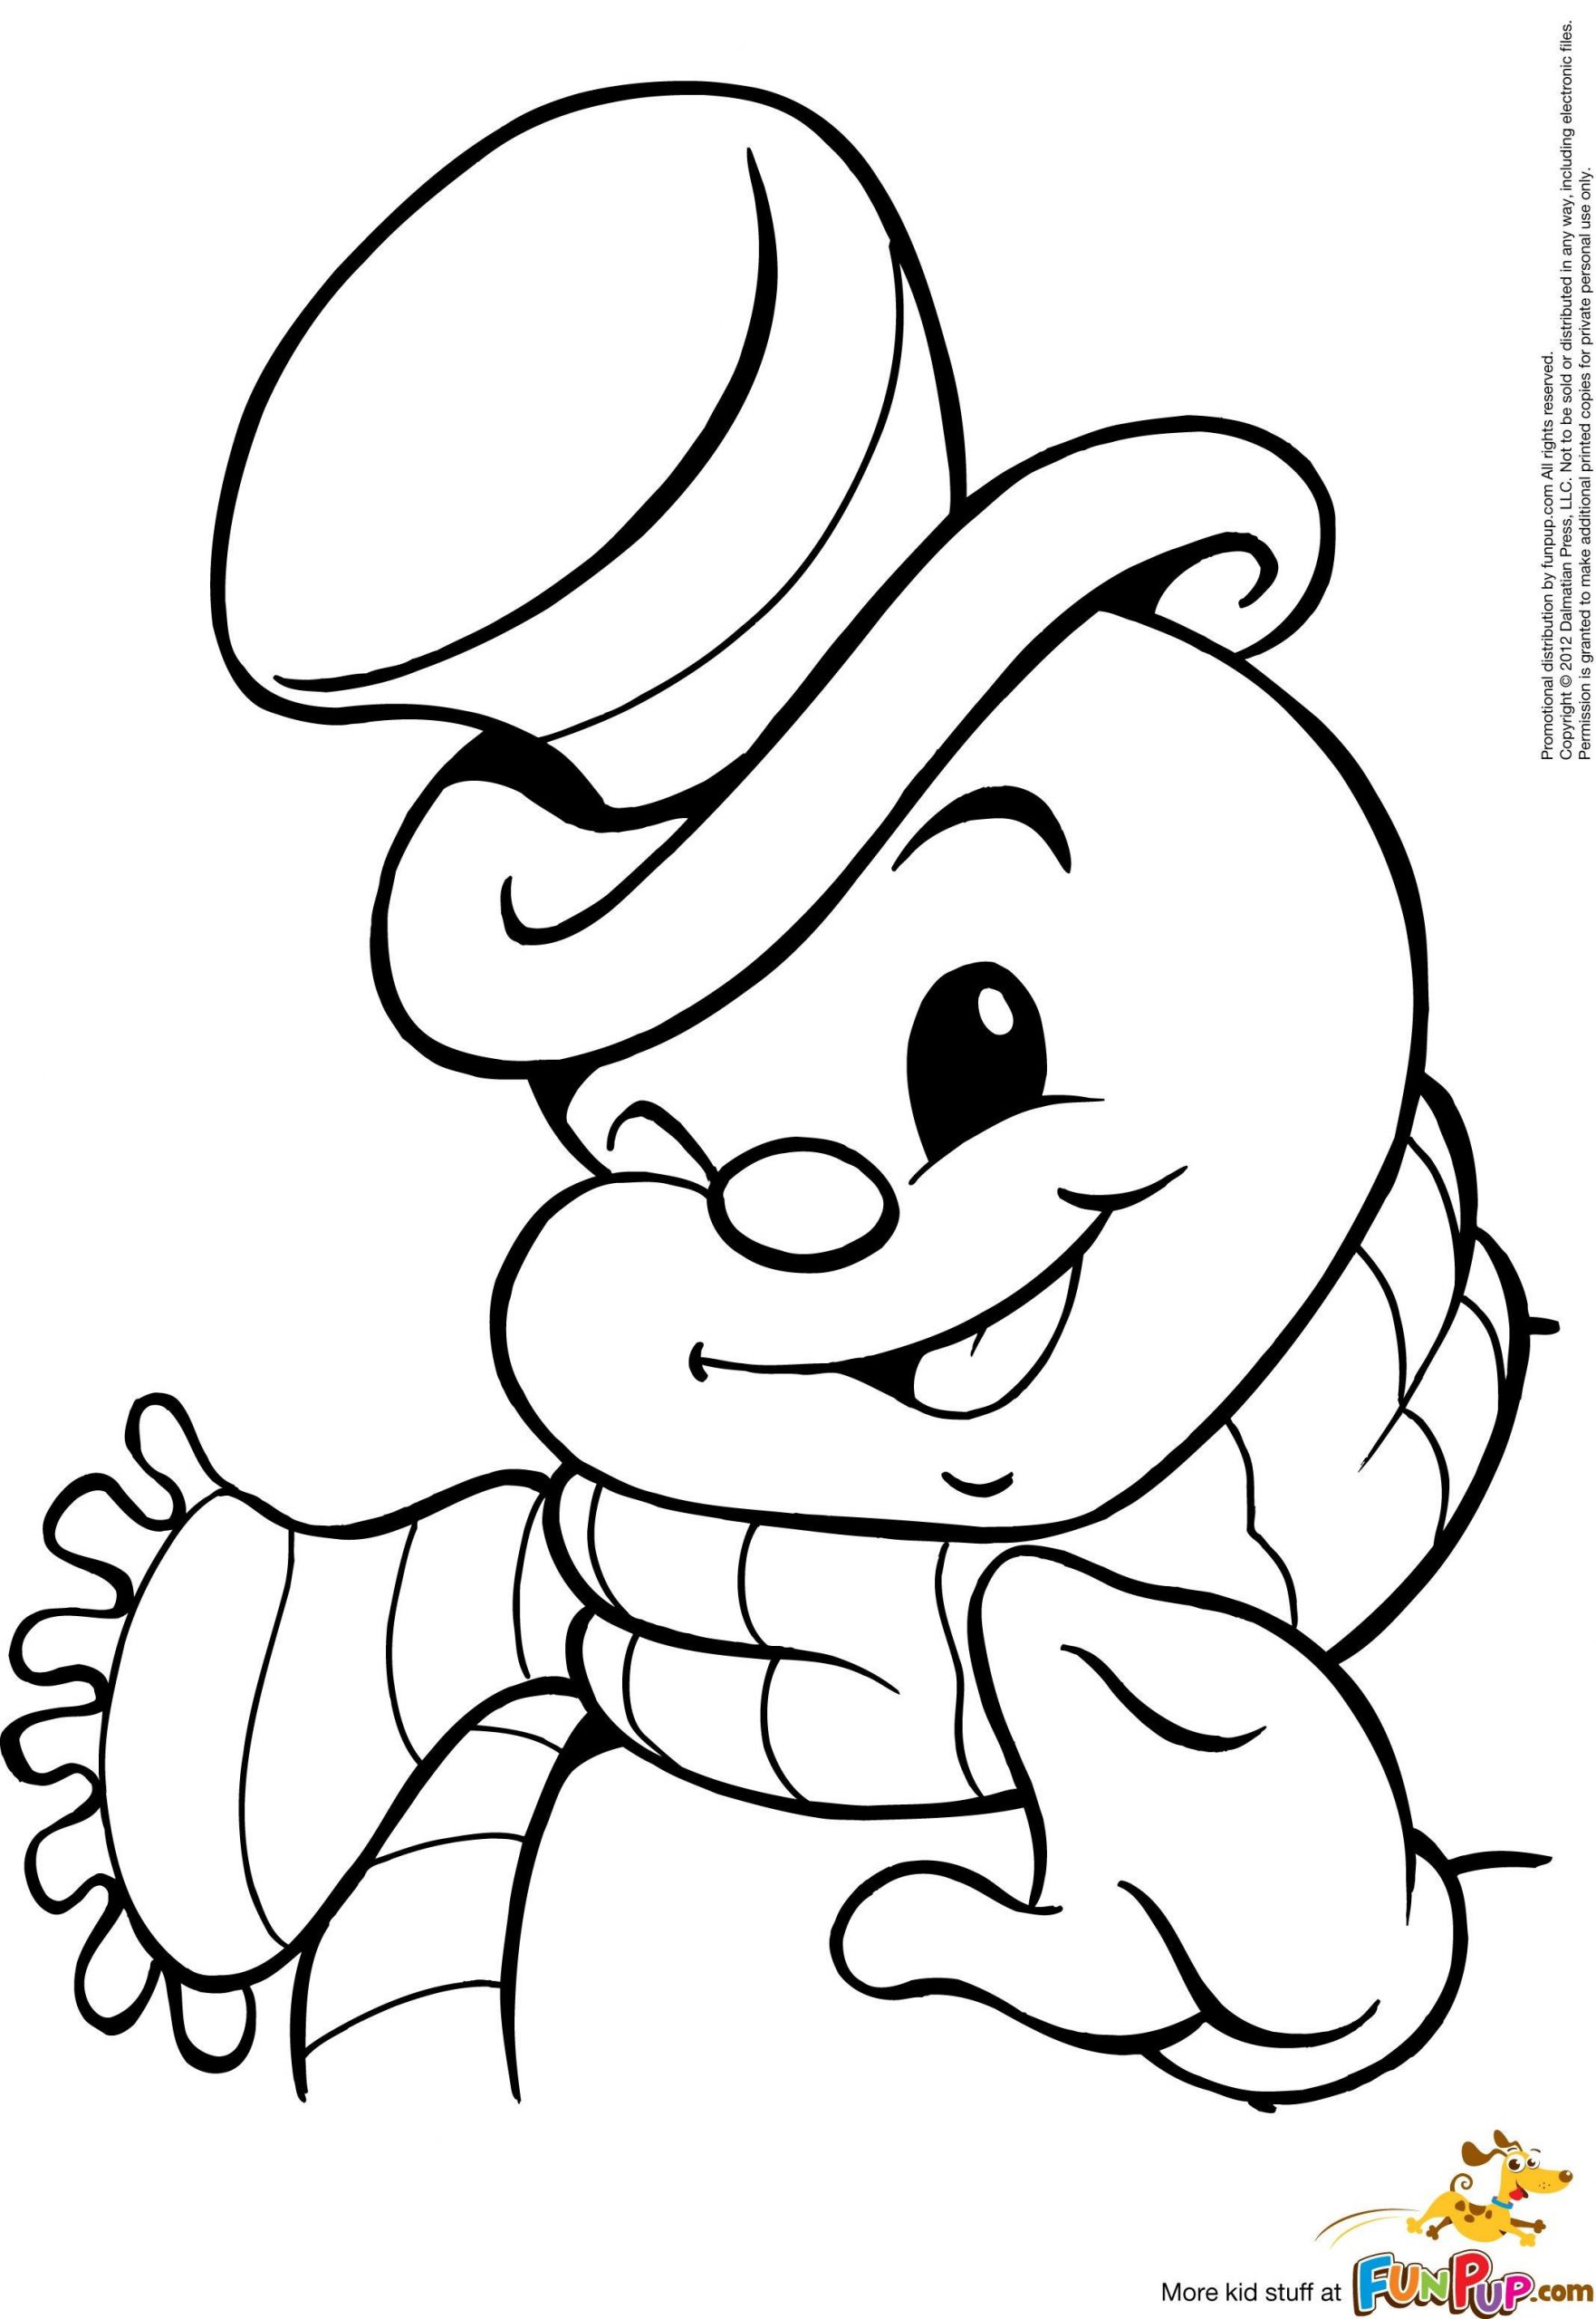 Snowman Printable Coloring Pages
 Snowman Wink $0 00 Coloring pages Pinterest